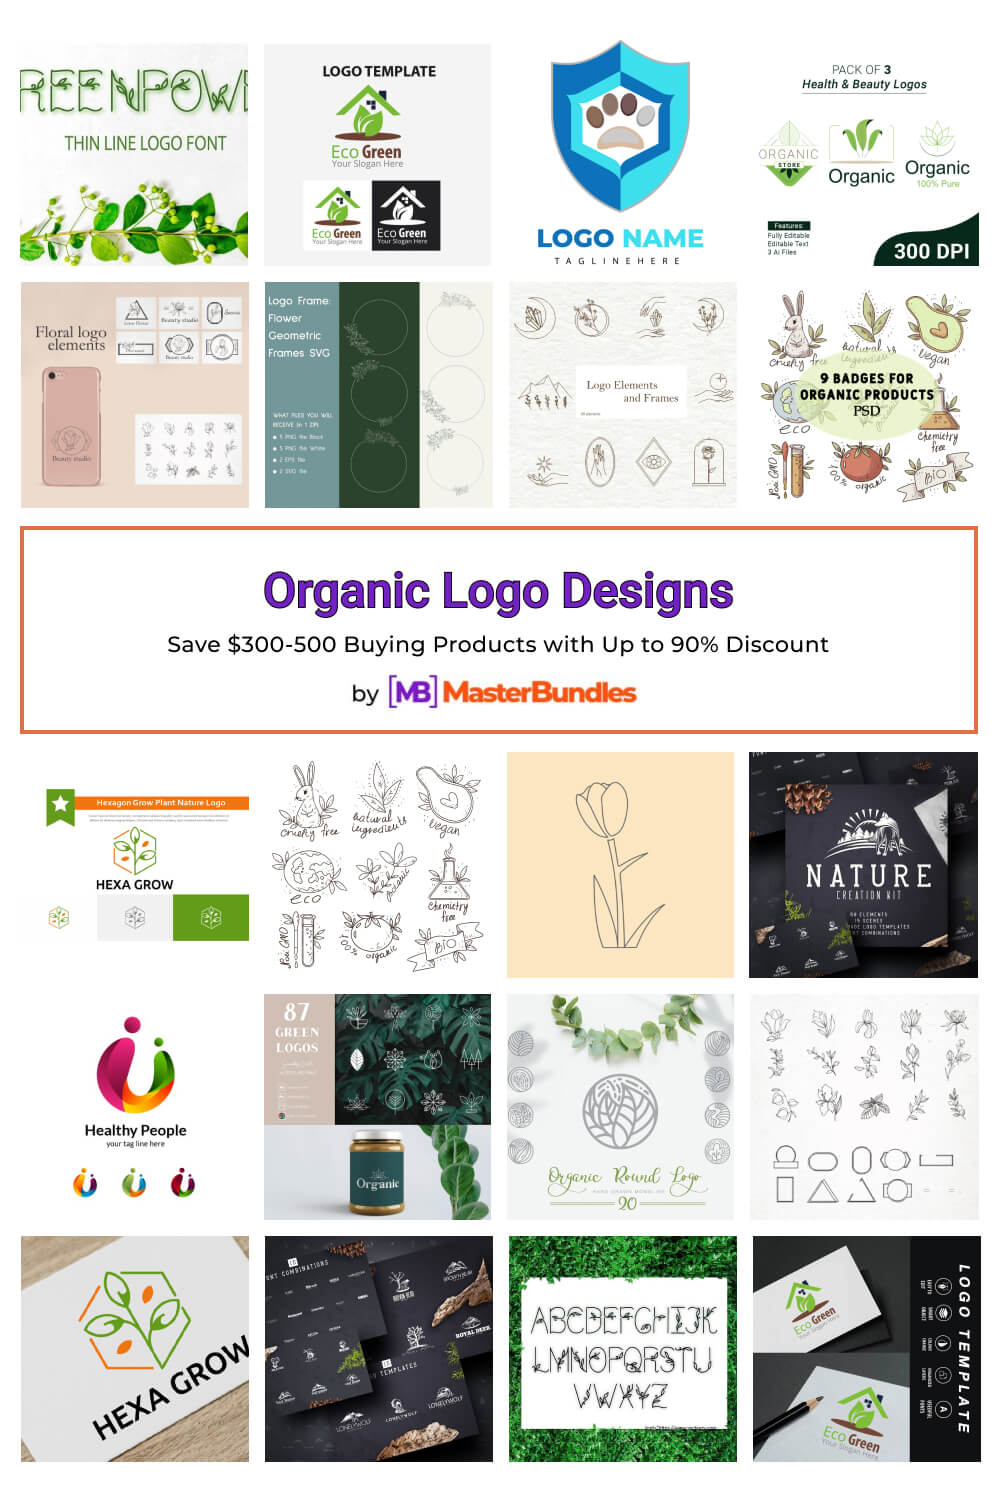 organic logo designs pinterest image.